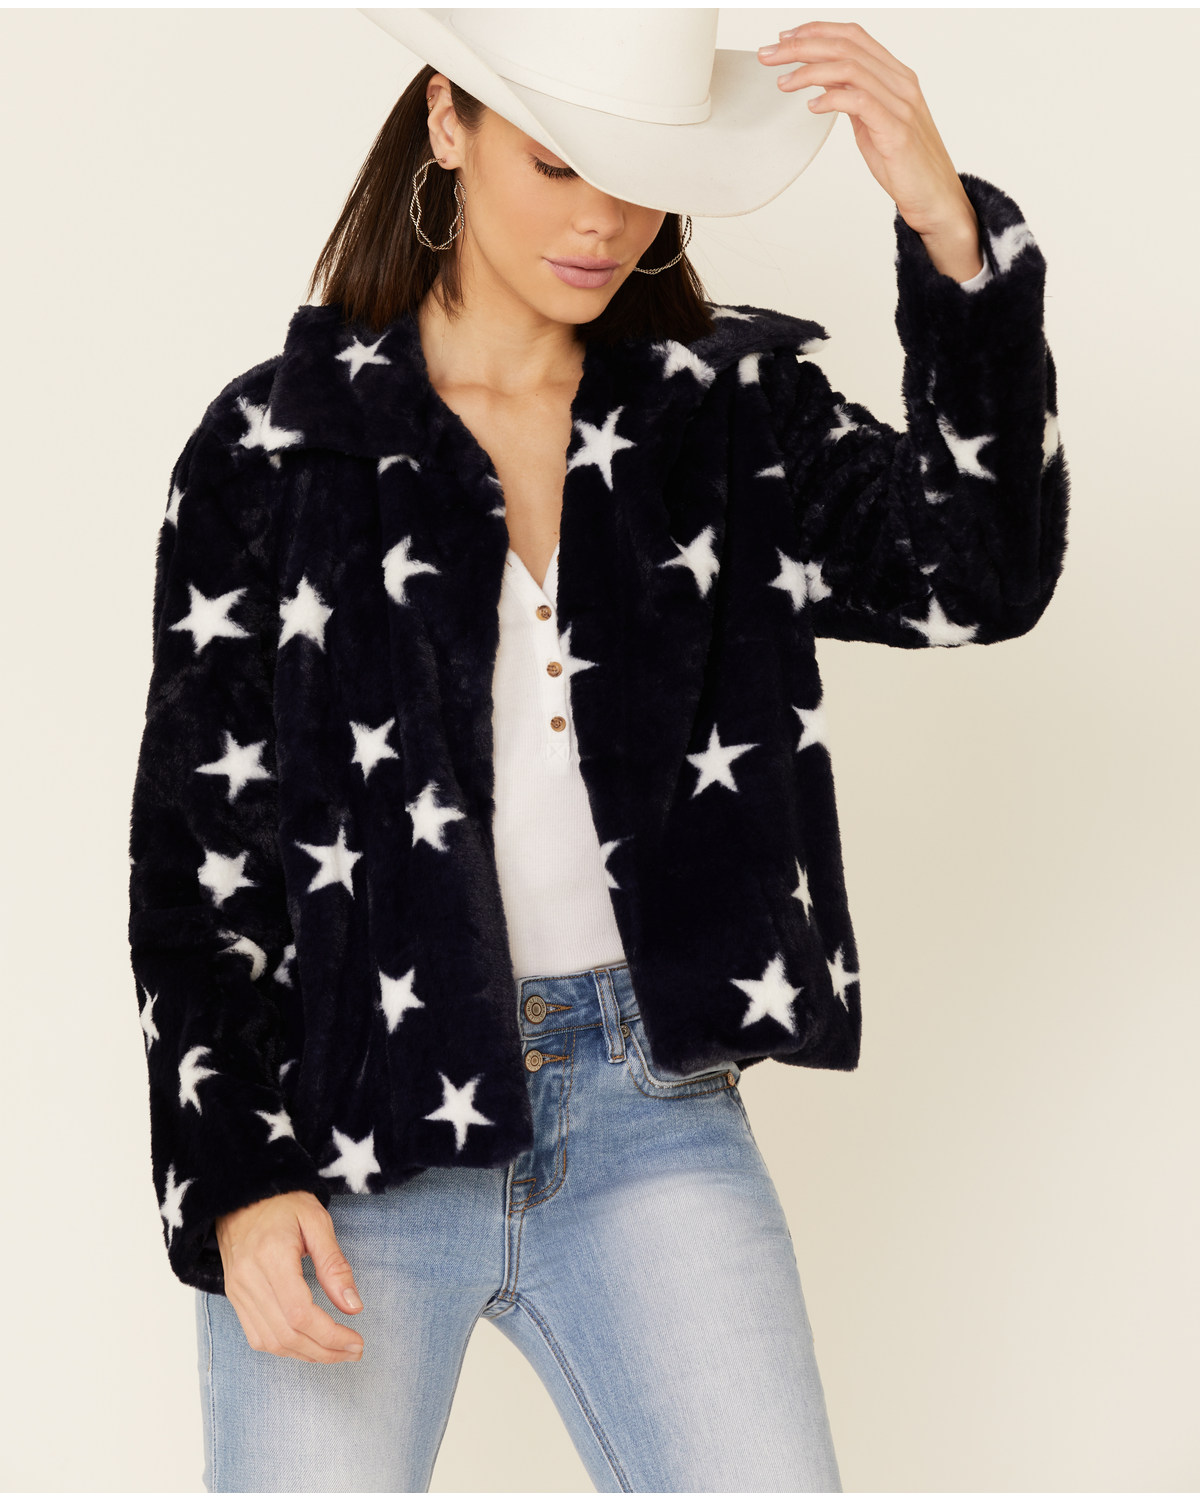 Hem & Thread Women's Navy Star Print Faux Fur Jacket